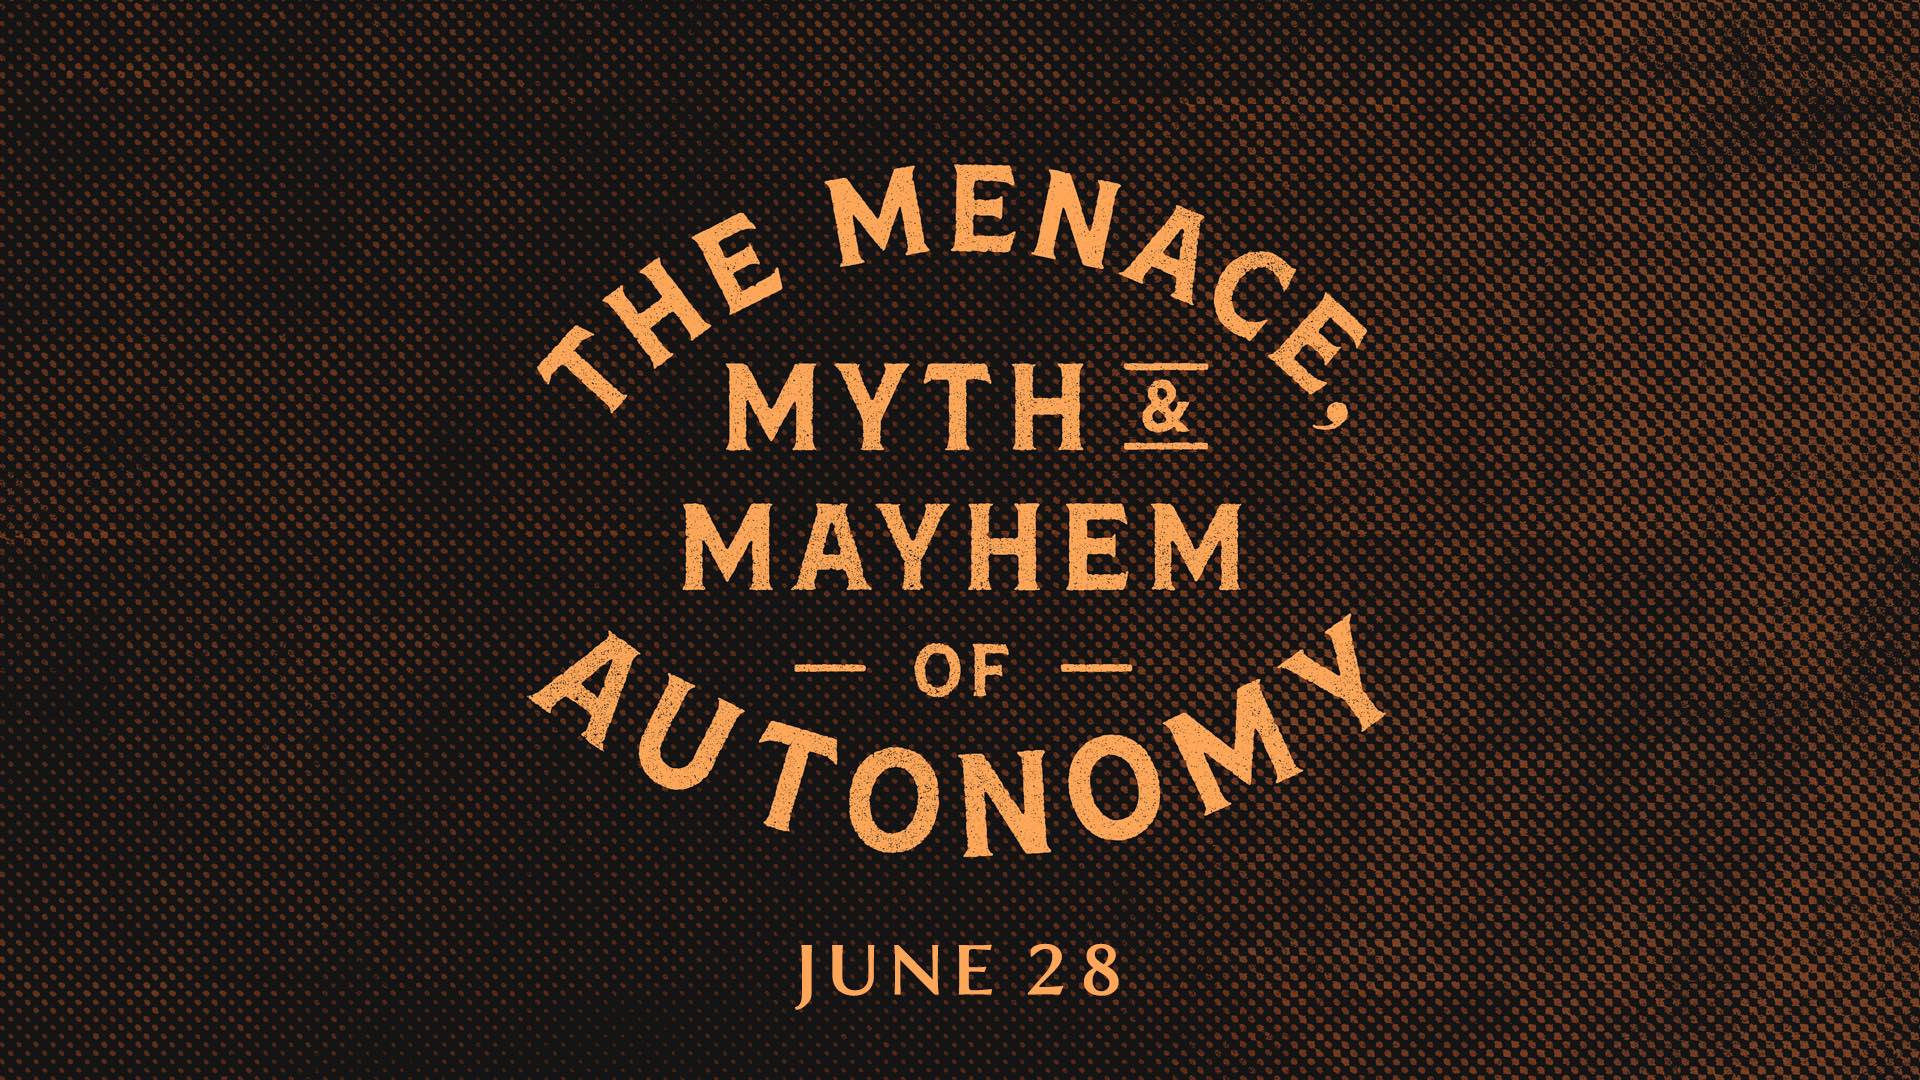 The Menace, Myth & Mayhem of Autonomy